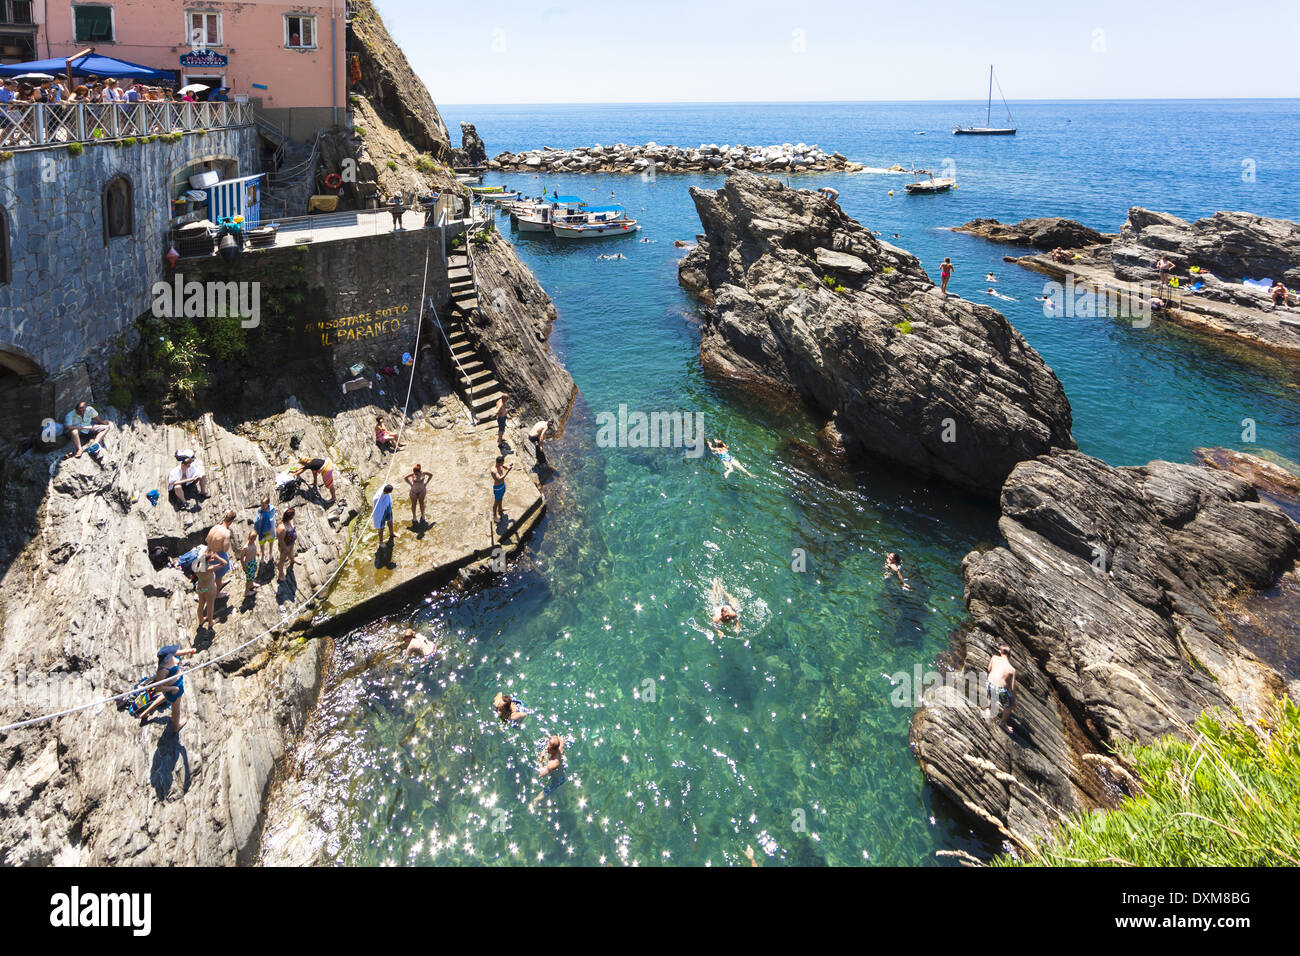 Italy, Liguria, La Spezia, Cinque Terre, Manarola, view to waterside and bathing people Stock Photo